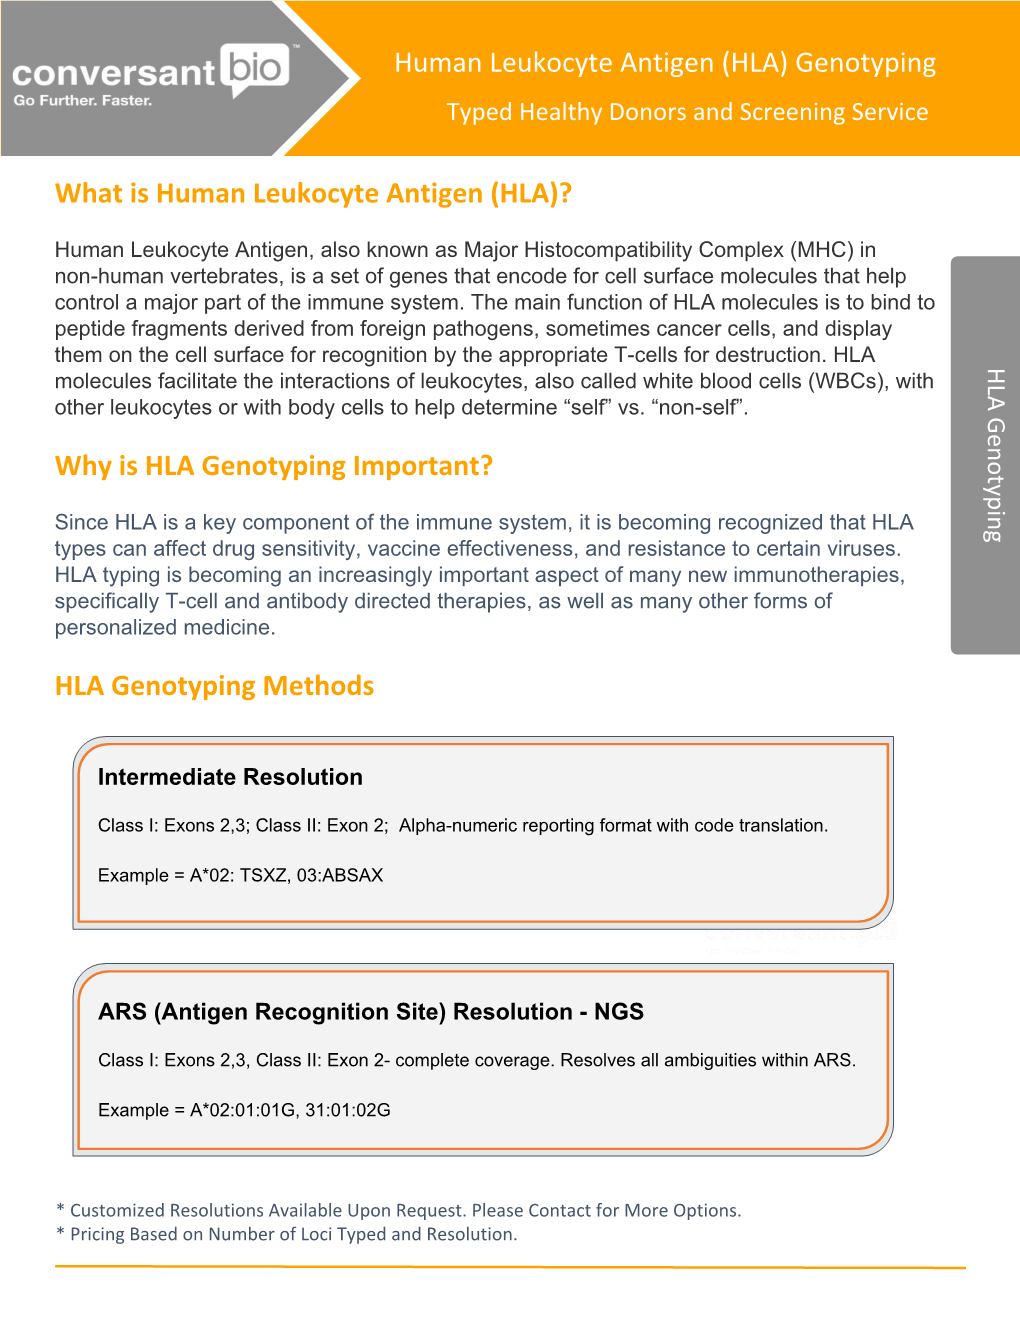 Human Leukocyte Antigen (HLA) Genotyping What Is Human Leukocyte Antigen (HLA)? Why Is HLA Genotyping Important? HLA Genotyping